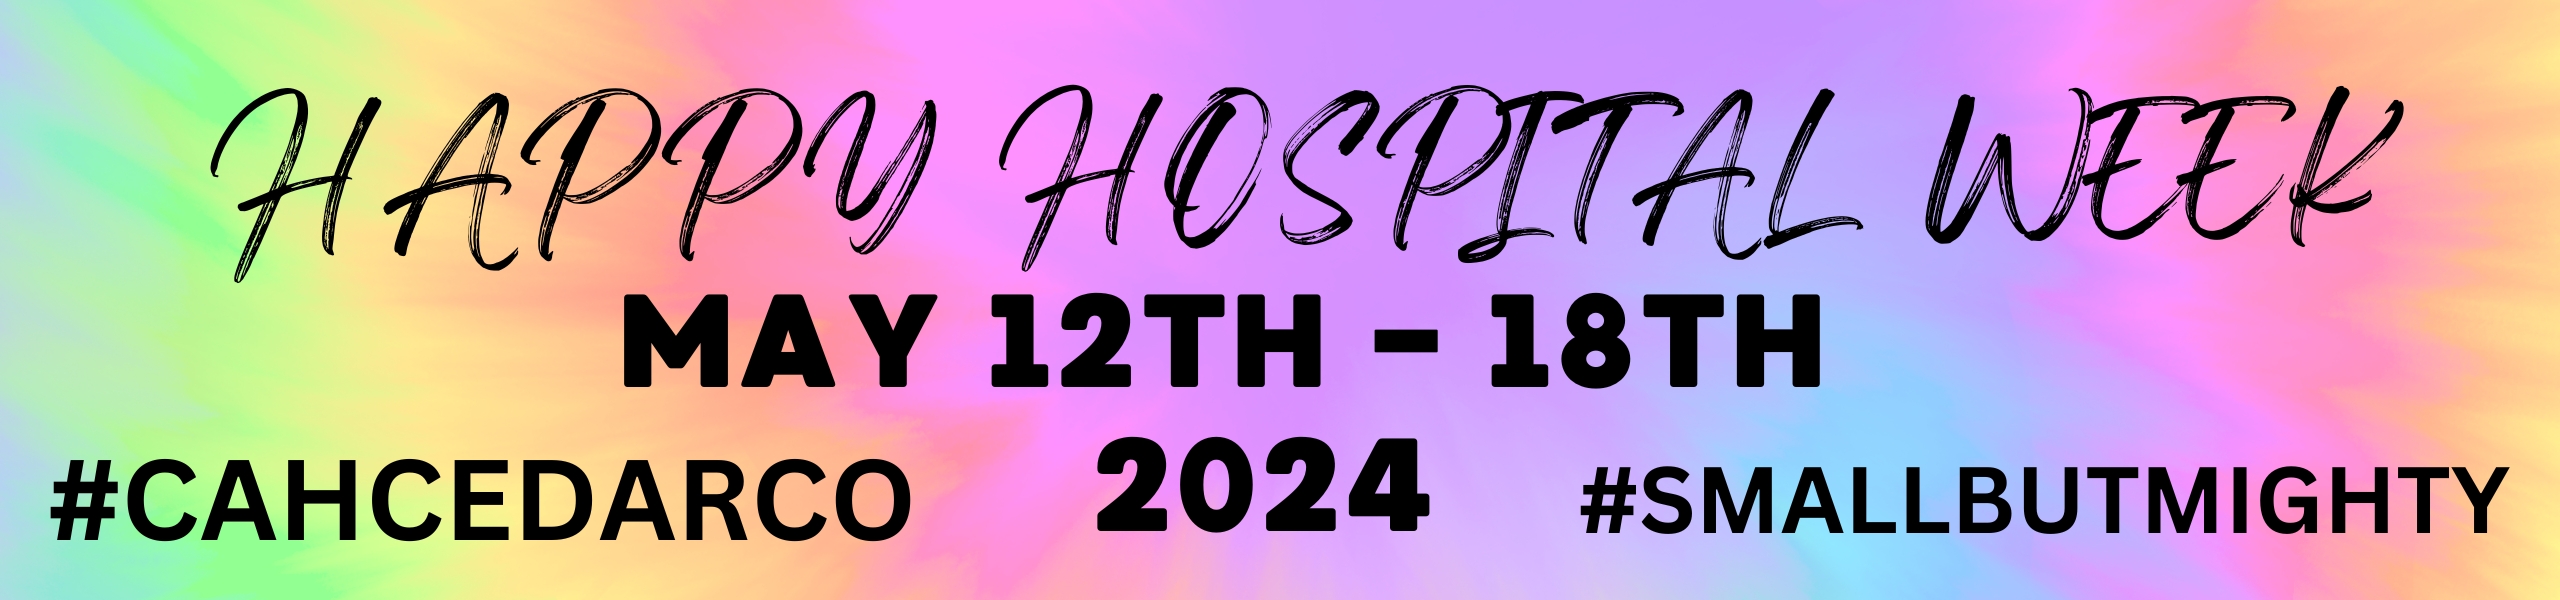 HAPPY HOSPITAL WEEK MAY 12TH-18TH 2024